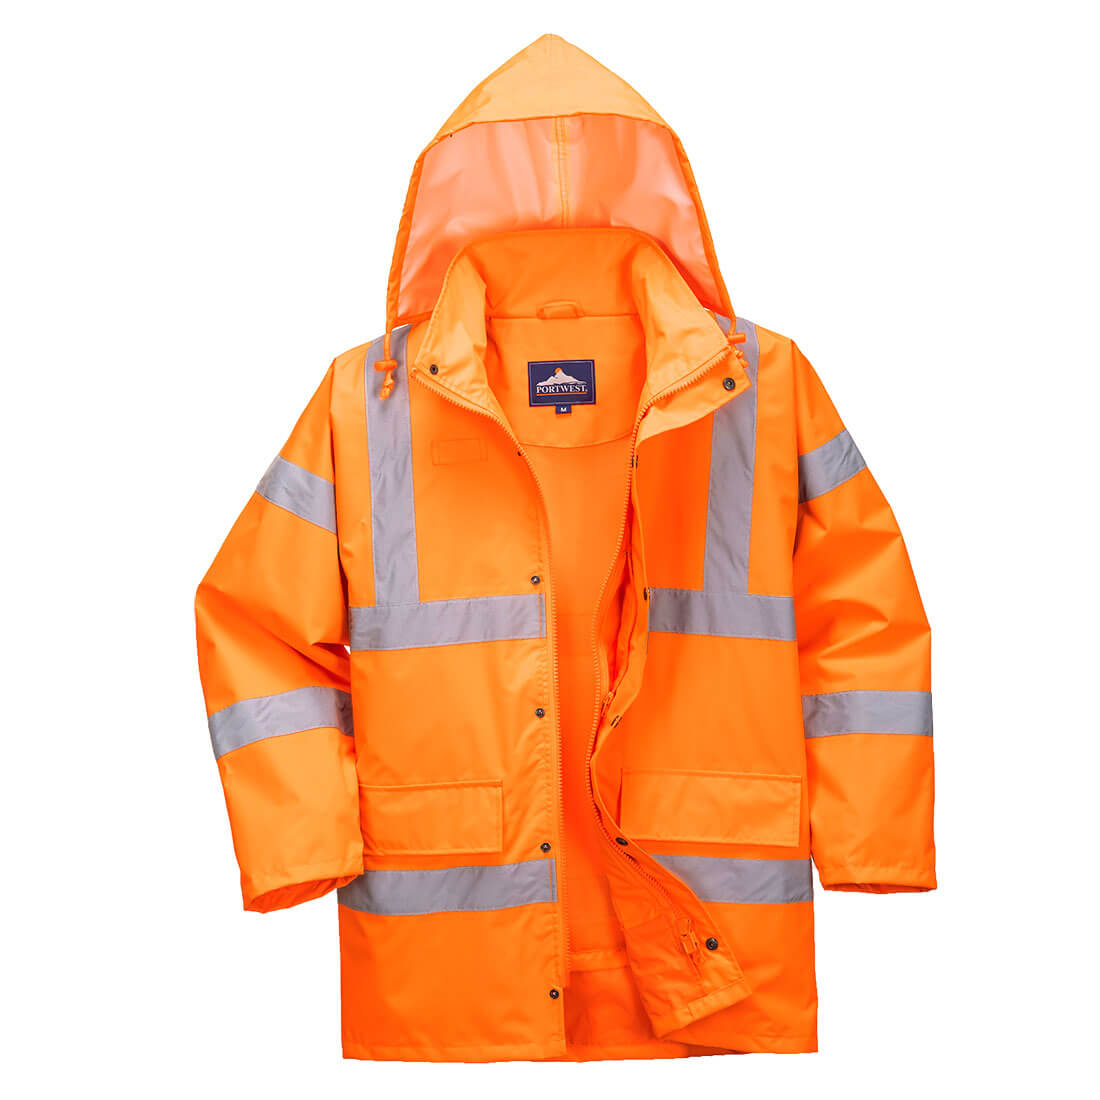 Image of Oxford Weave 300D Class 3 Breathable Hi Vis Jacket Orange L